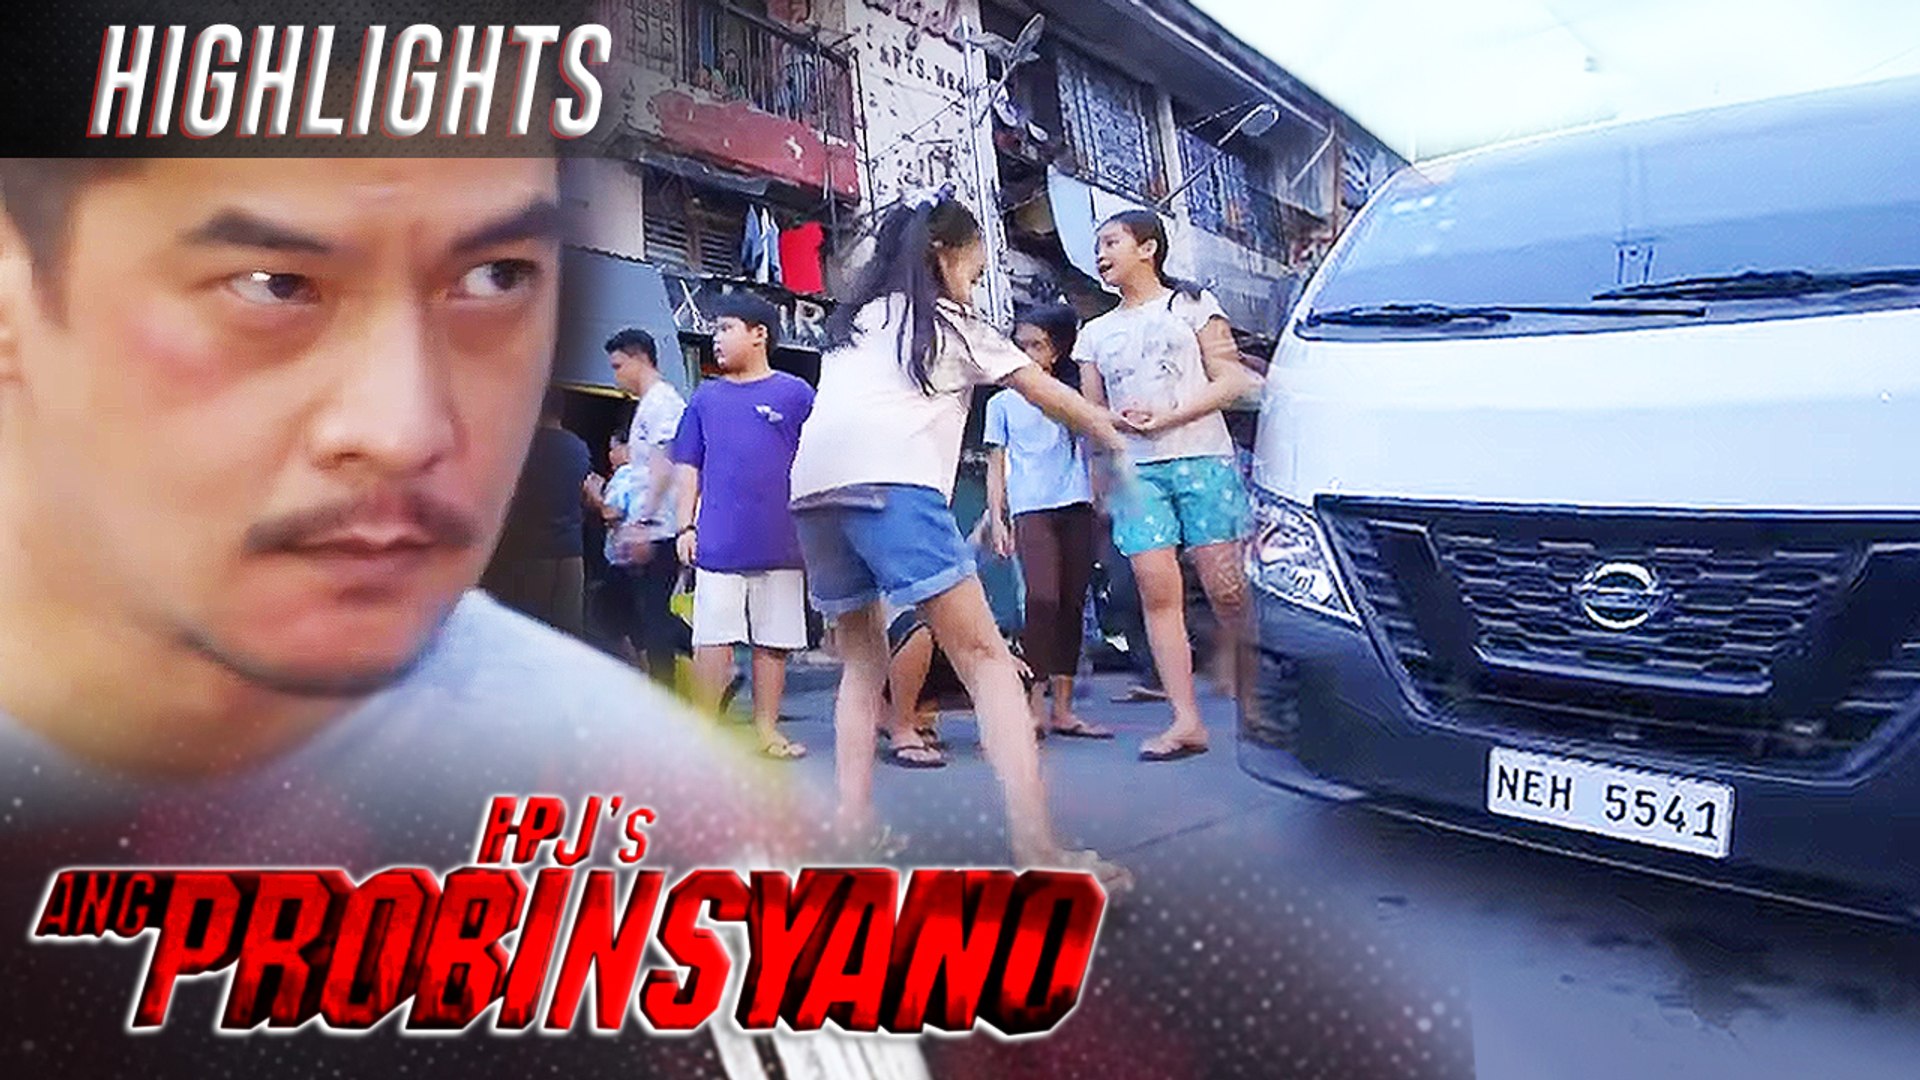 Juan steps between the kids and a white van | FPJ's Ang Probinsyano